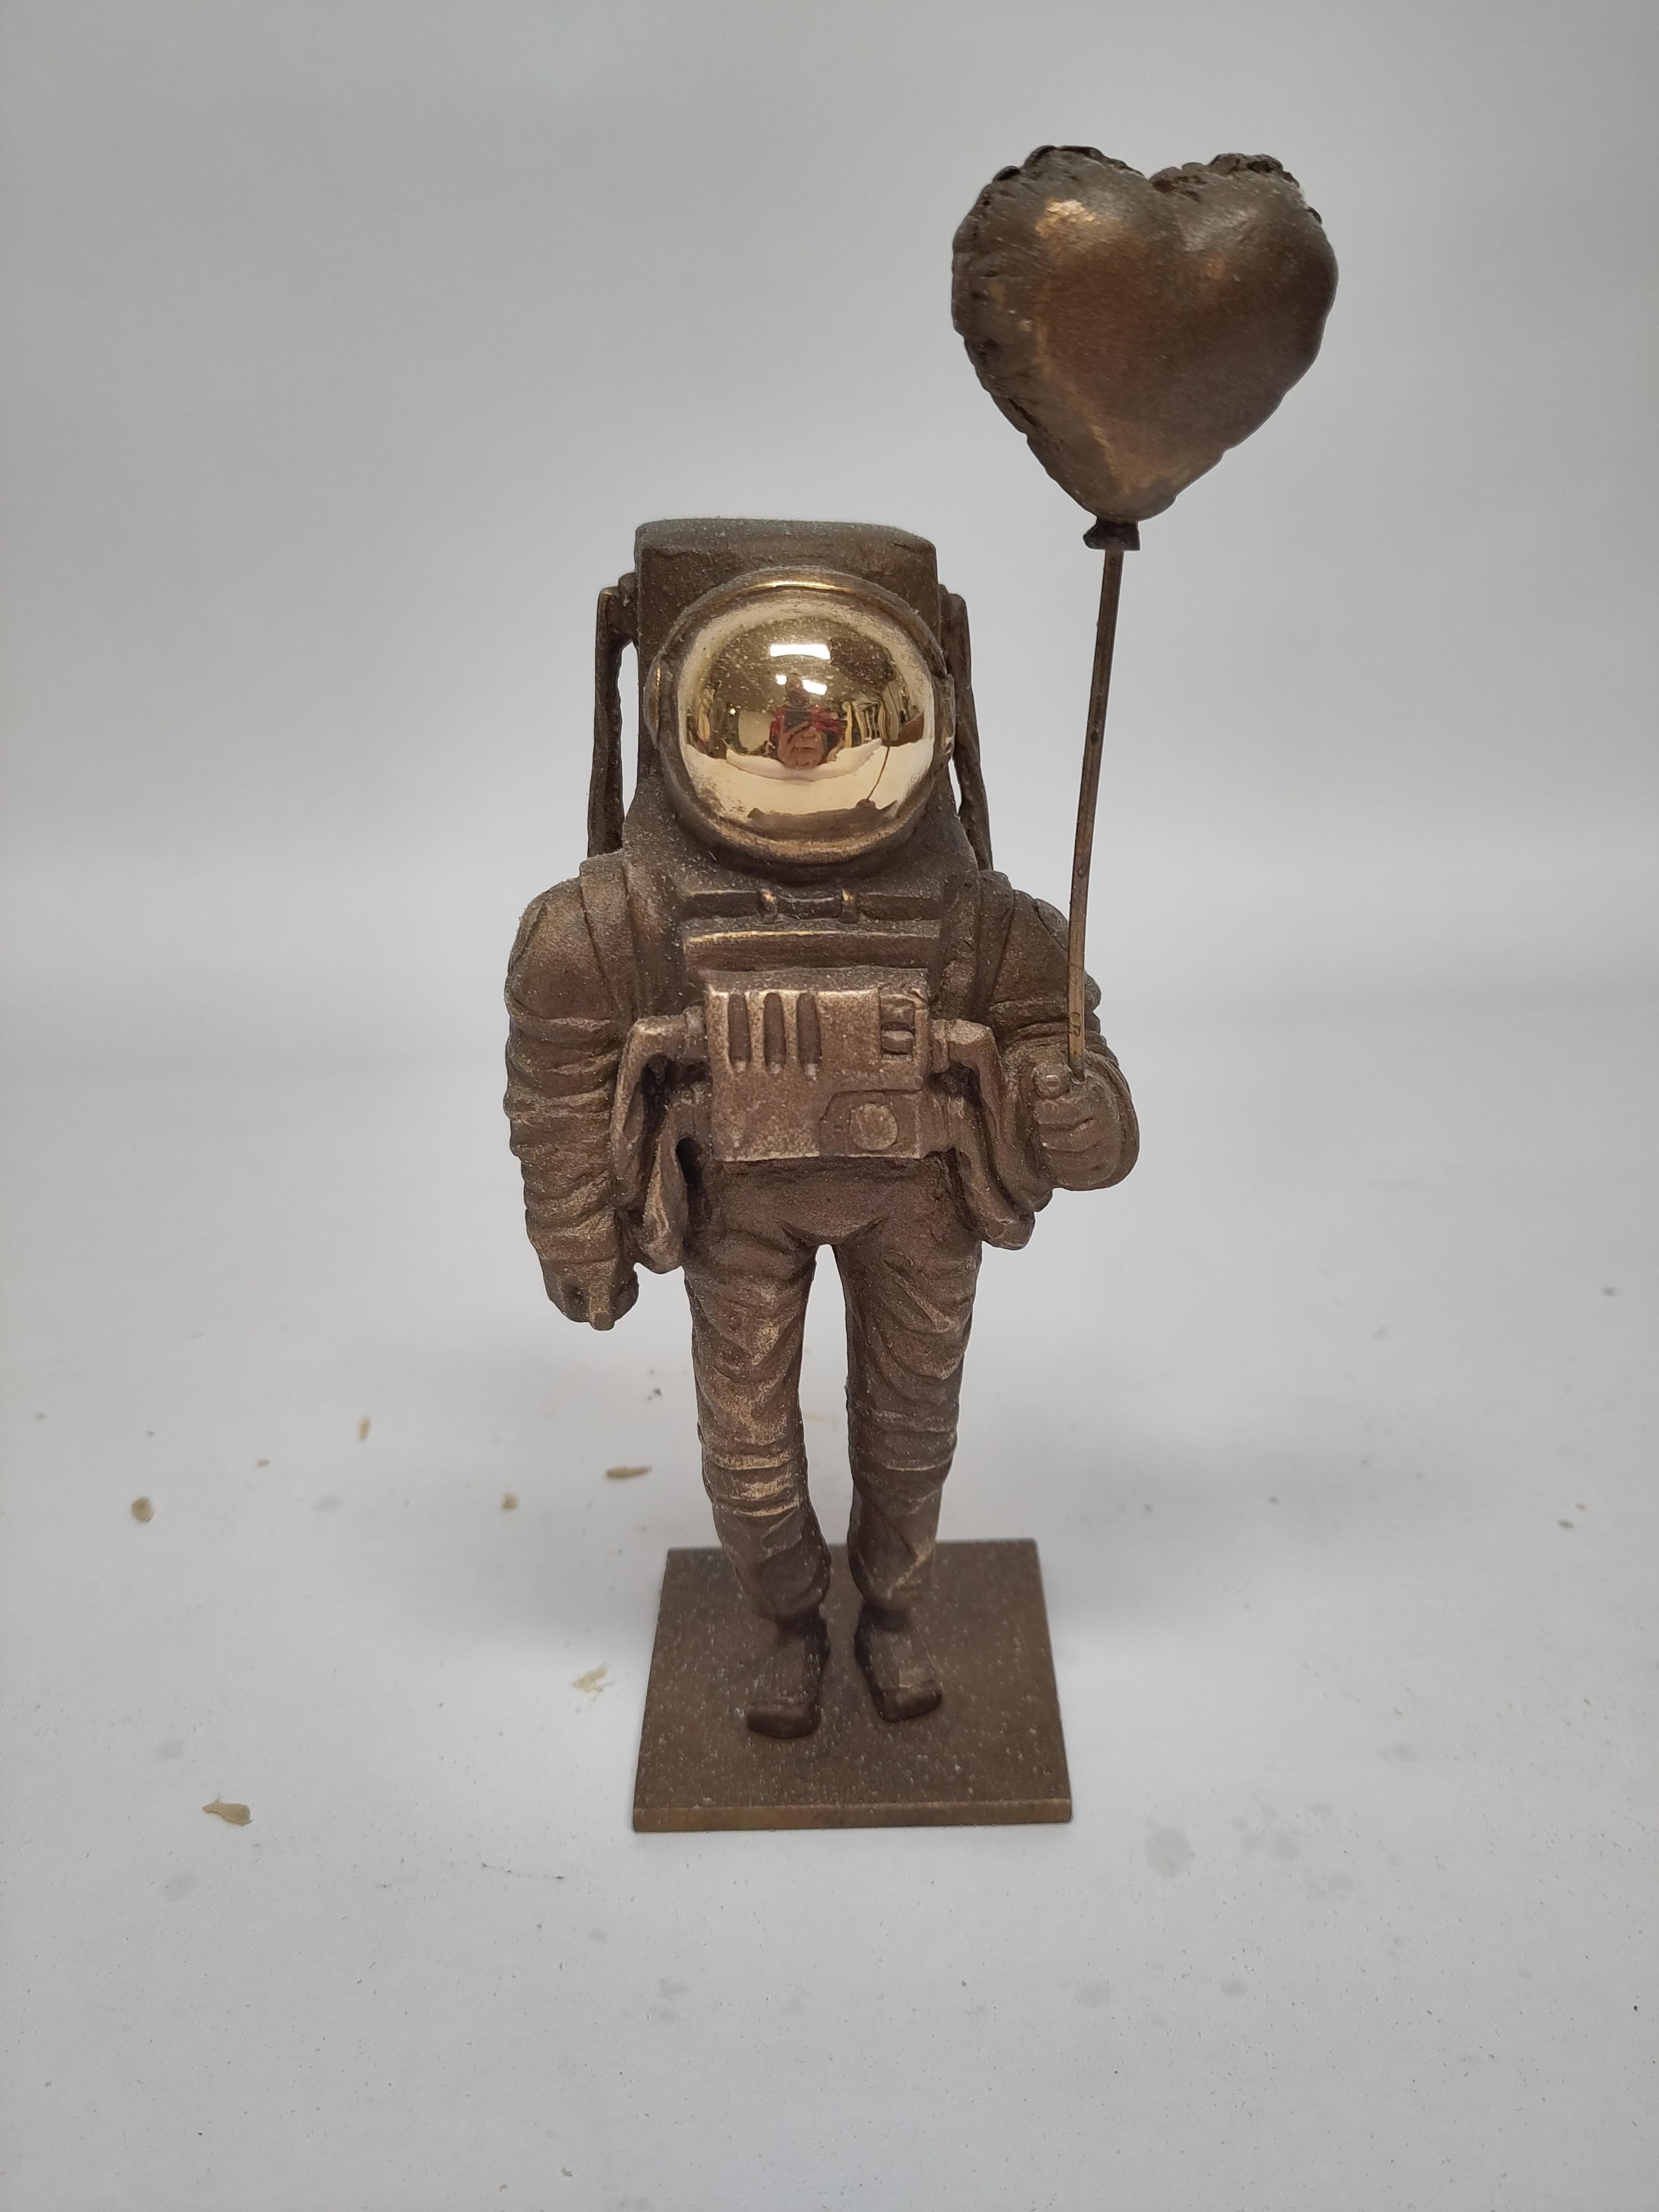 Philipp Liehr Figurative Sculpture - ''Love is the Message'' Bronze Sculpture of Astronaut with Heart Balloon